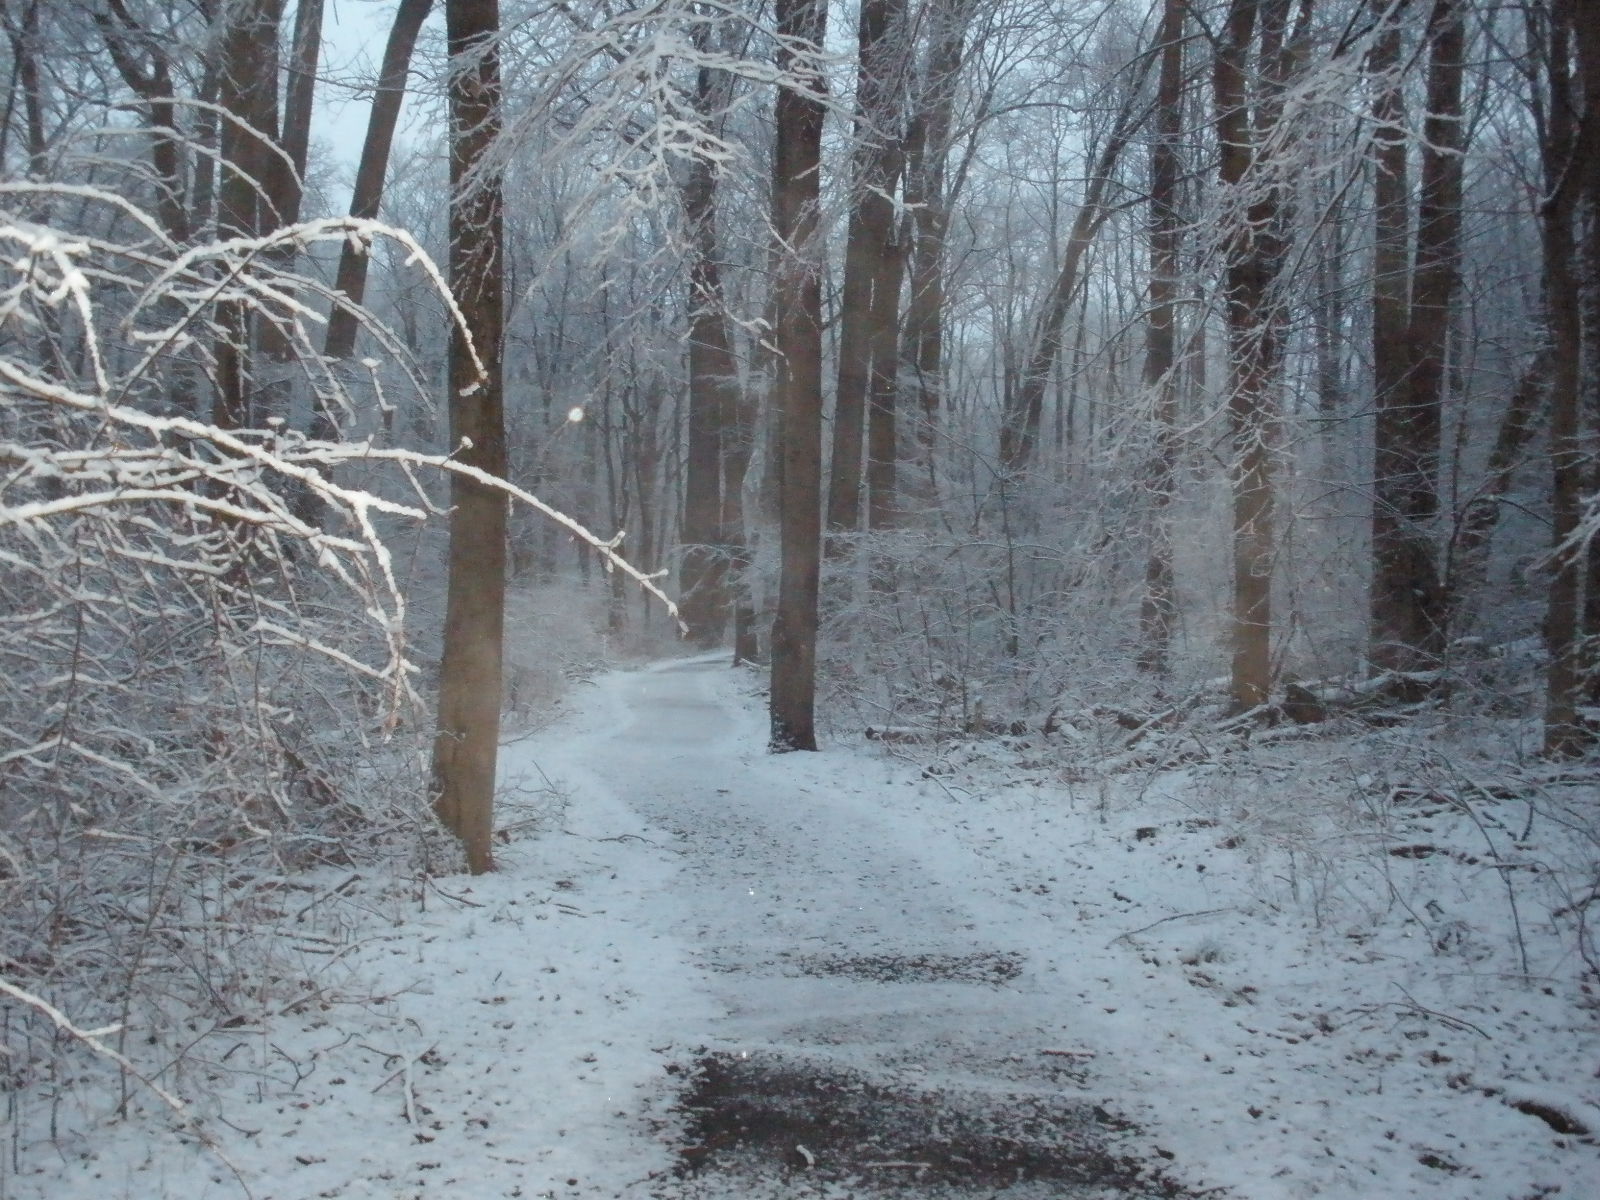 Life is Good : ): A snowy walk